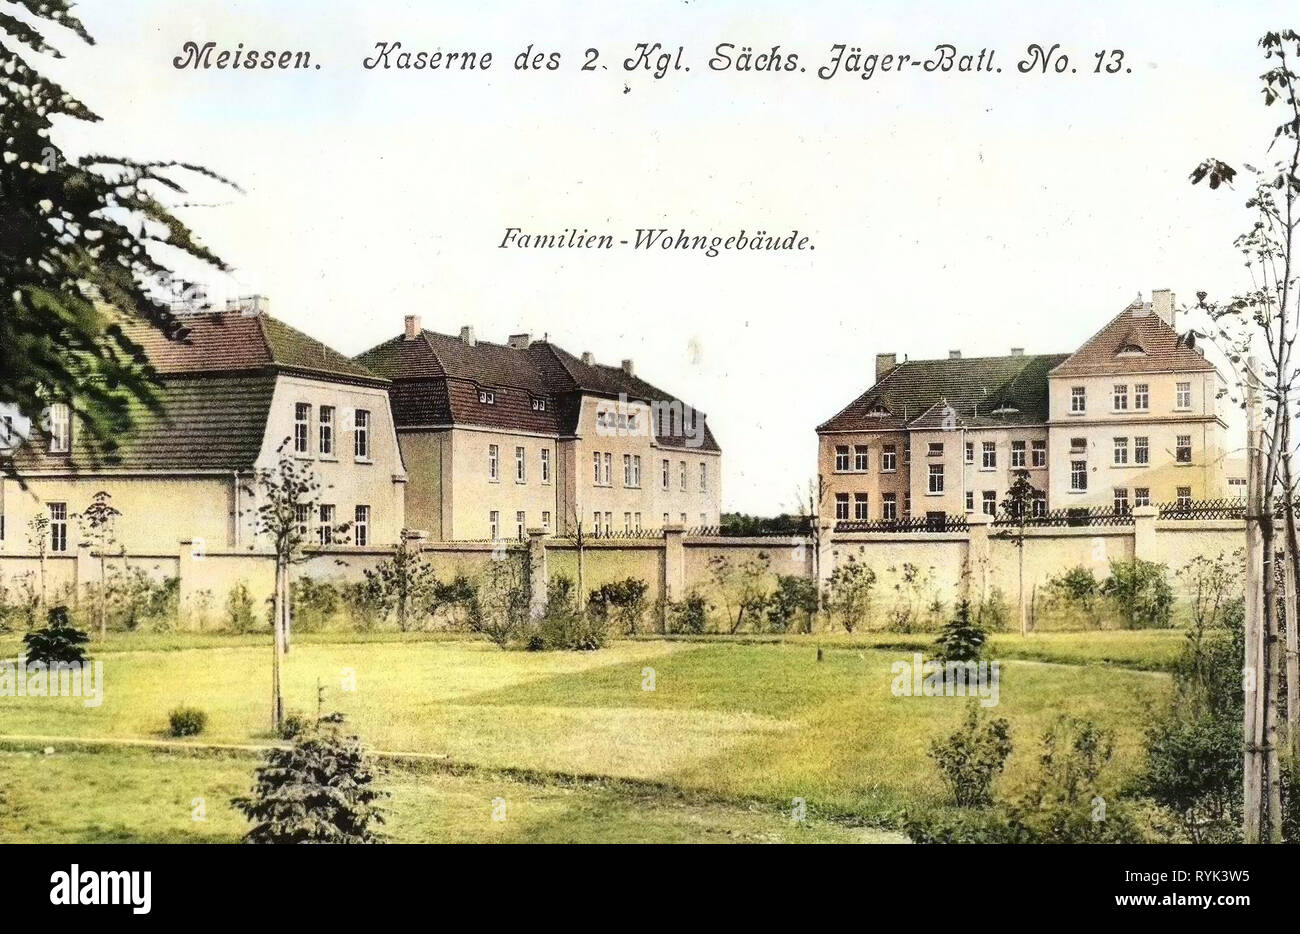 Military facilities of Germany, 2. Königlich Sächsisches Jäger-Bataillon Nr. 13, Buildings in Meißen, 1914, Meißen, Kaserne des 2. Königlich Sächsischen Jäger, Bataillon Nr. 13 Stock Photo